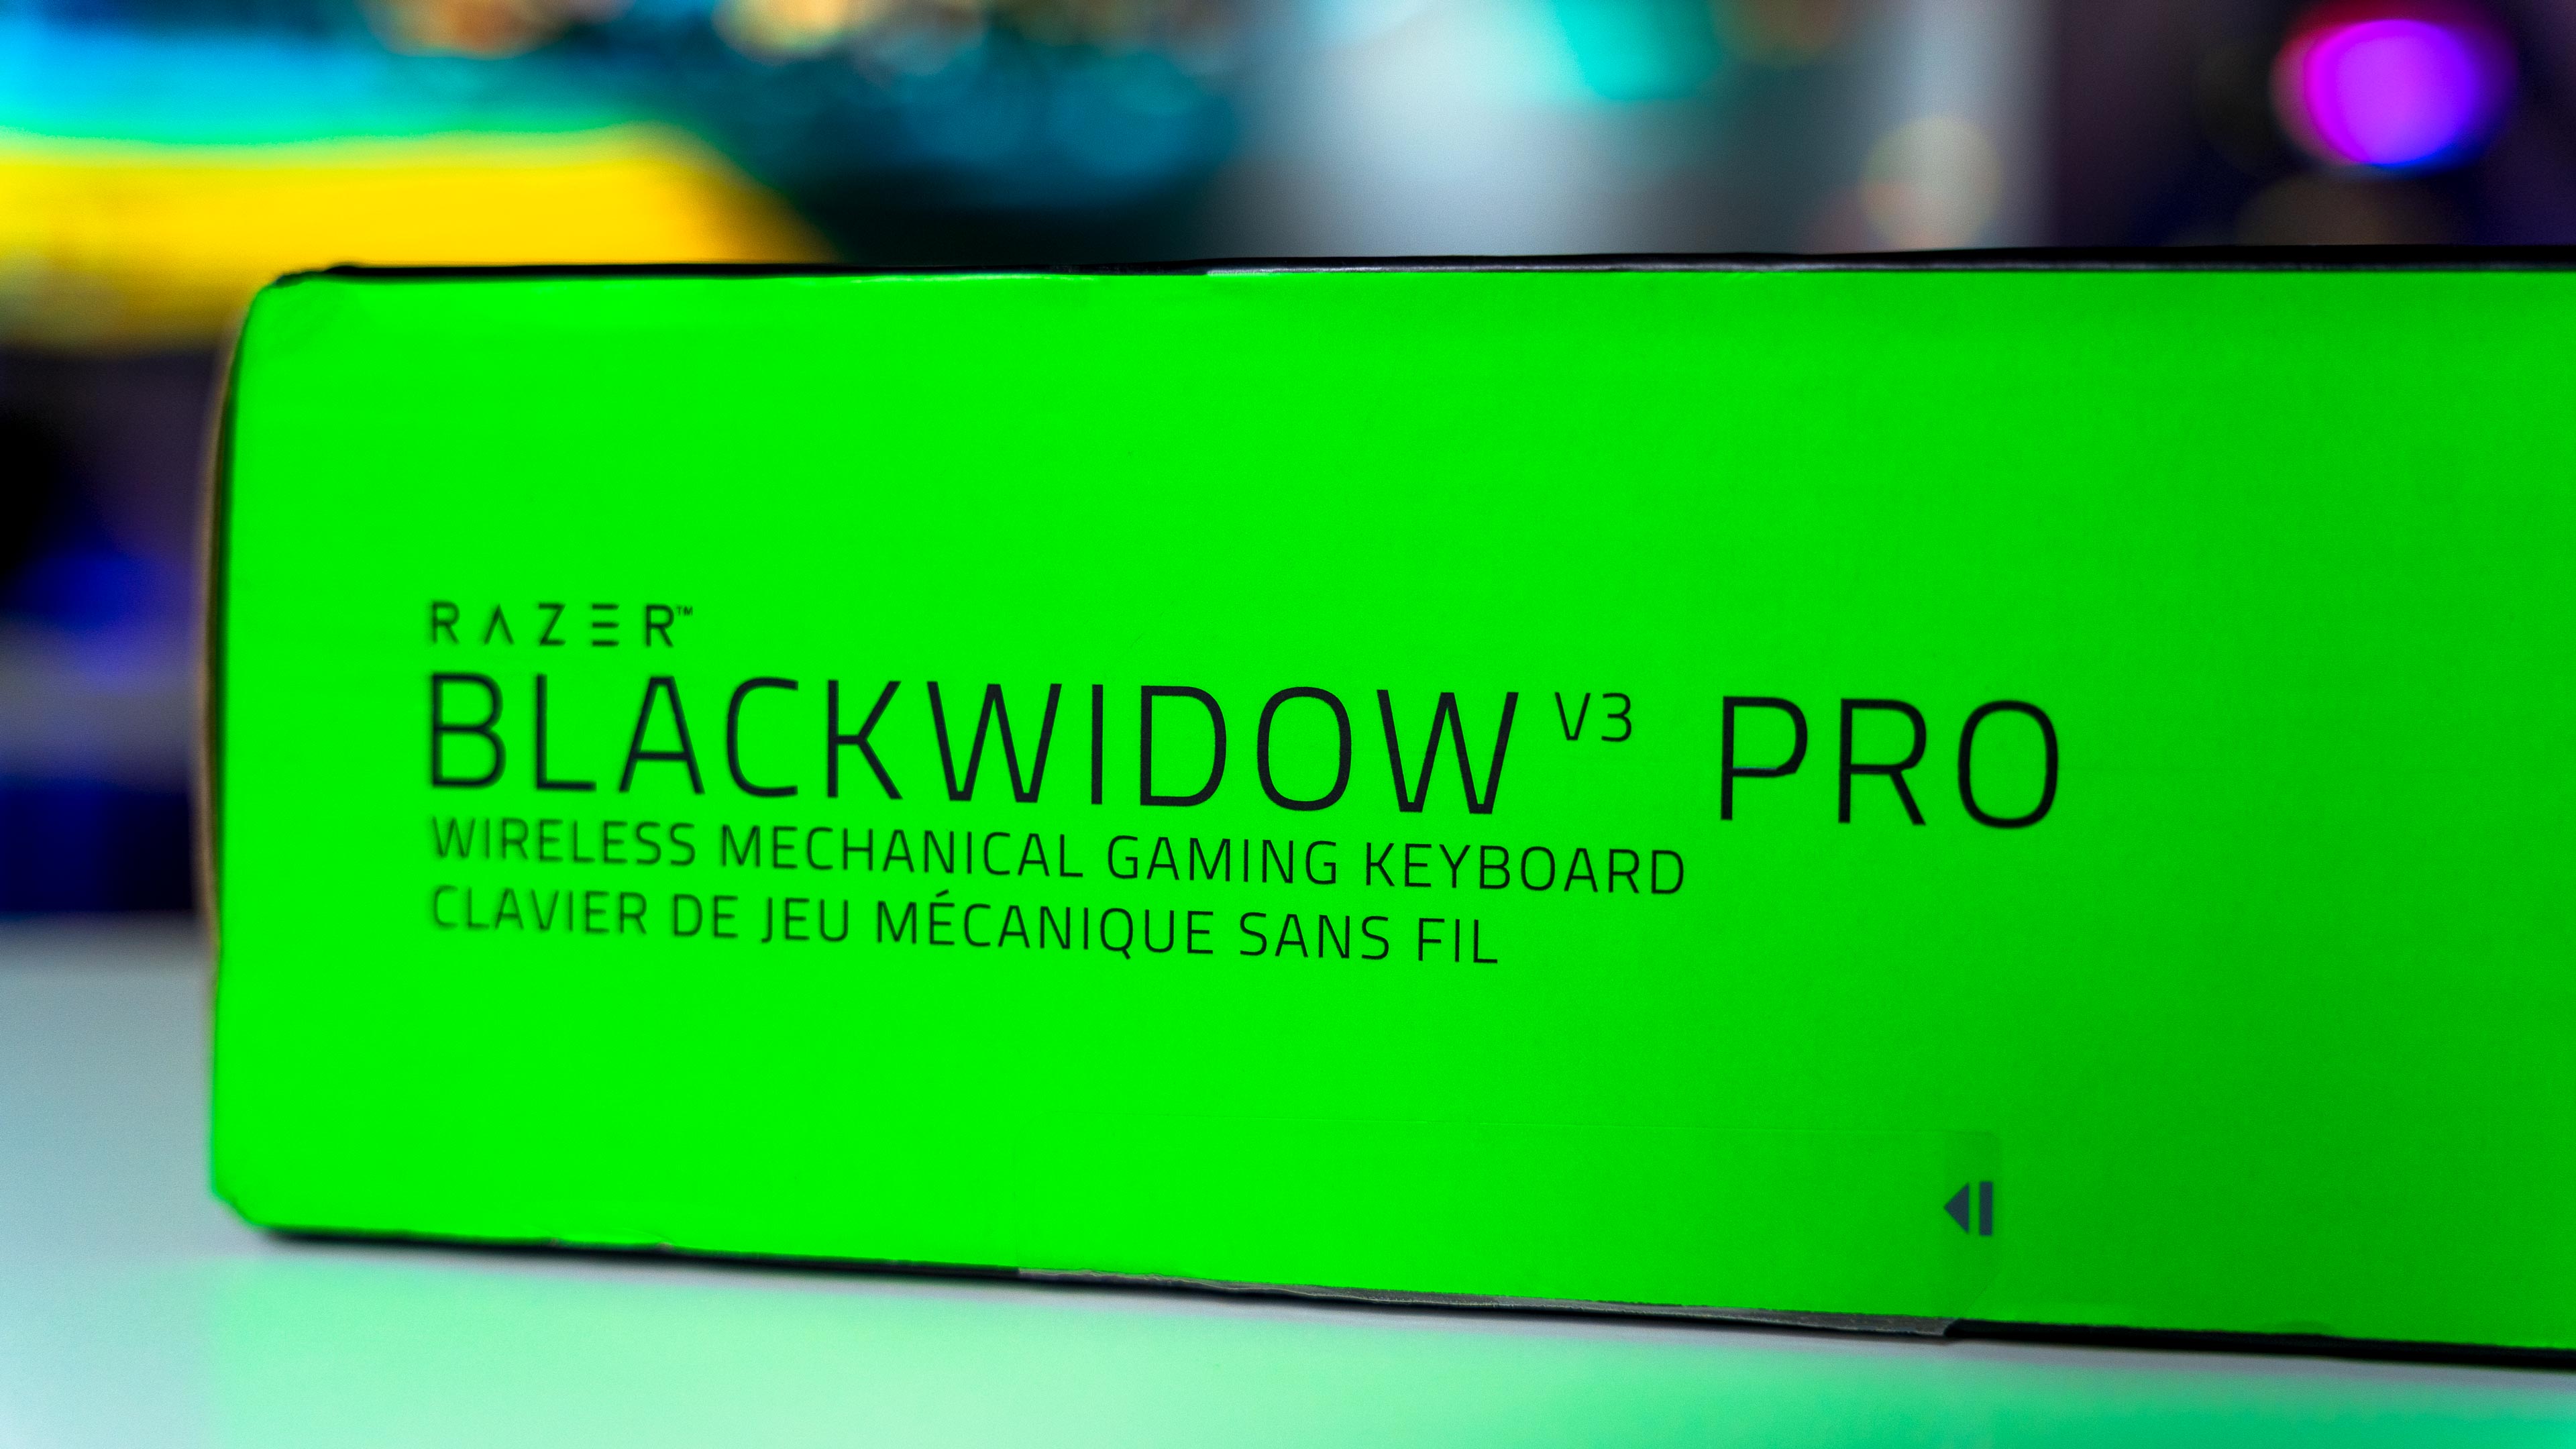 Razer Blackwidow V3 Pro Box (1)